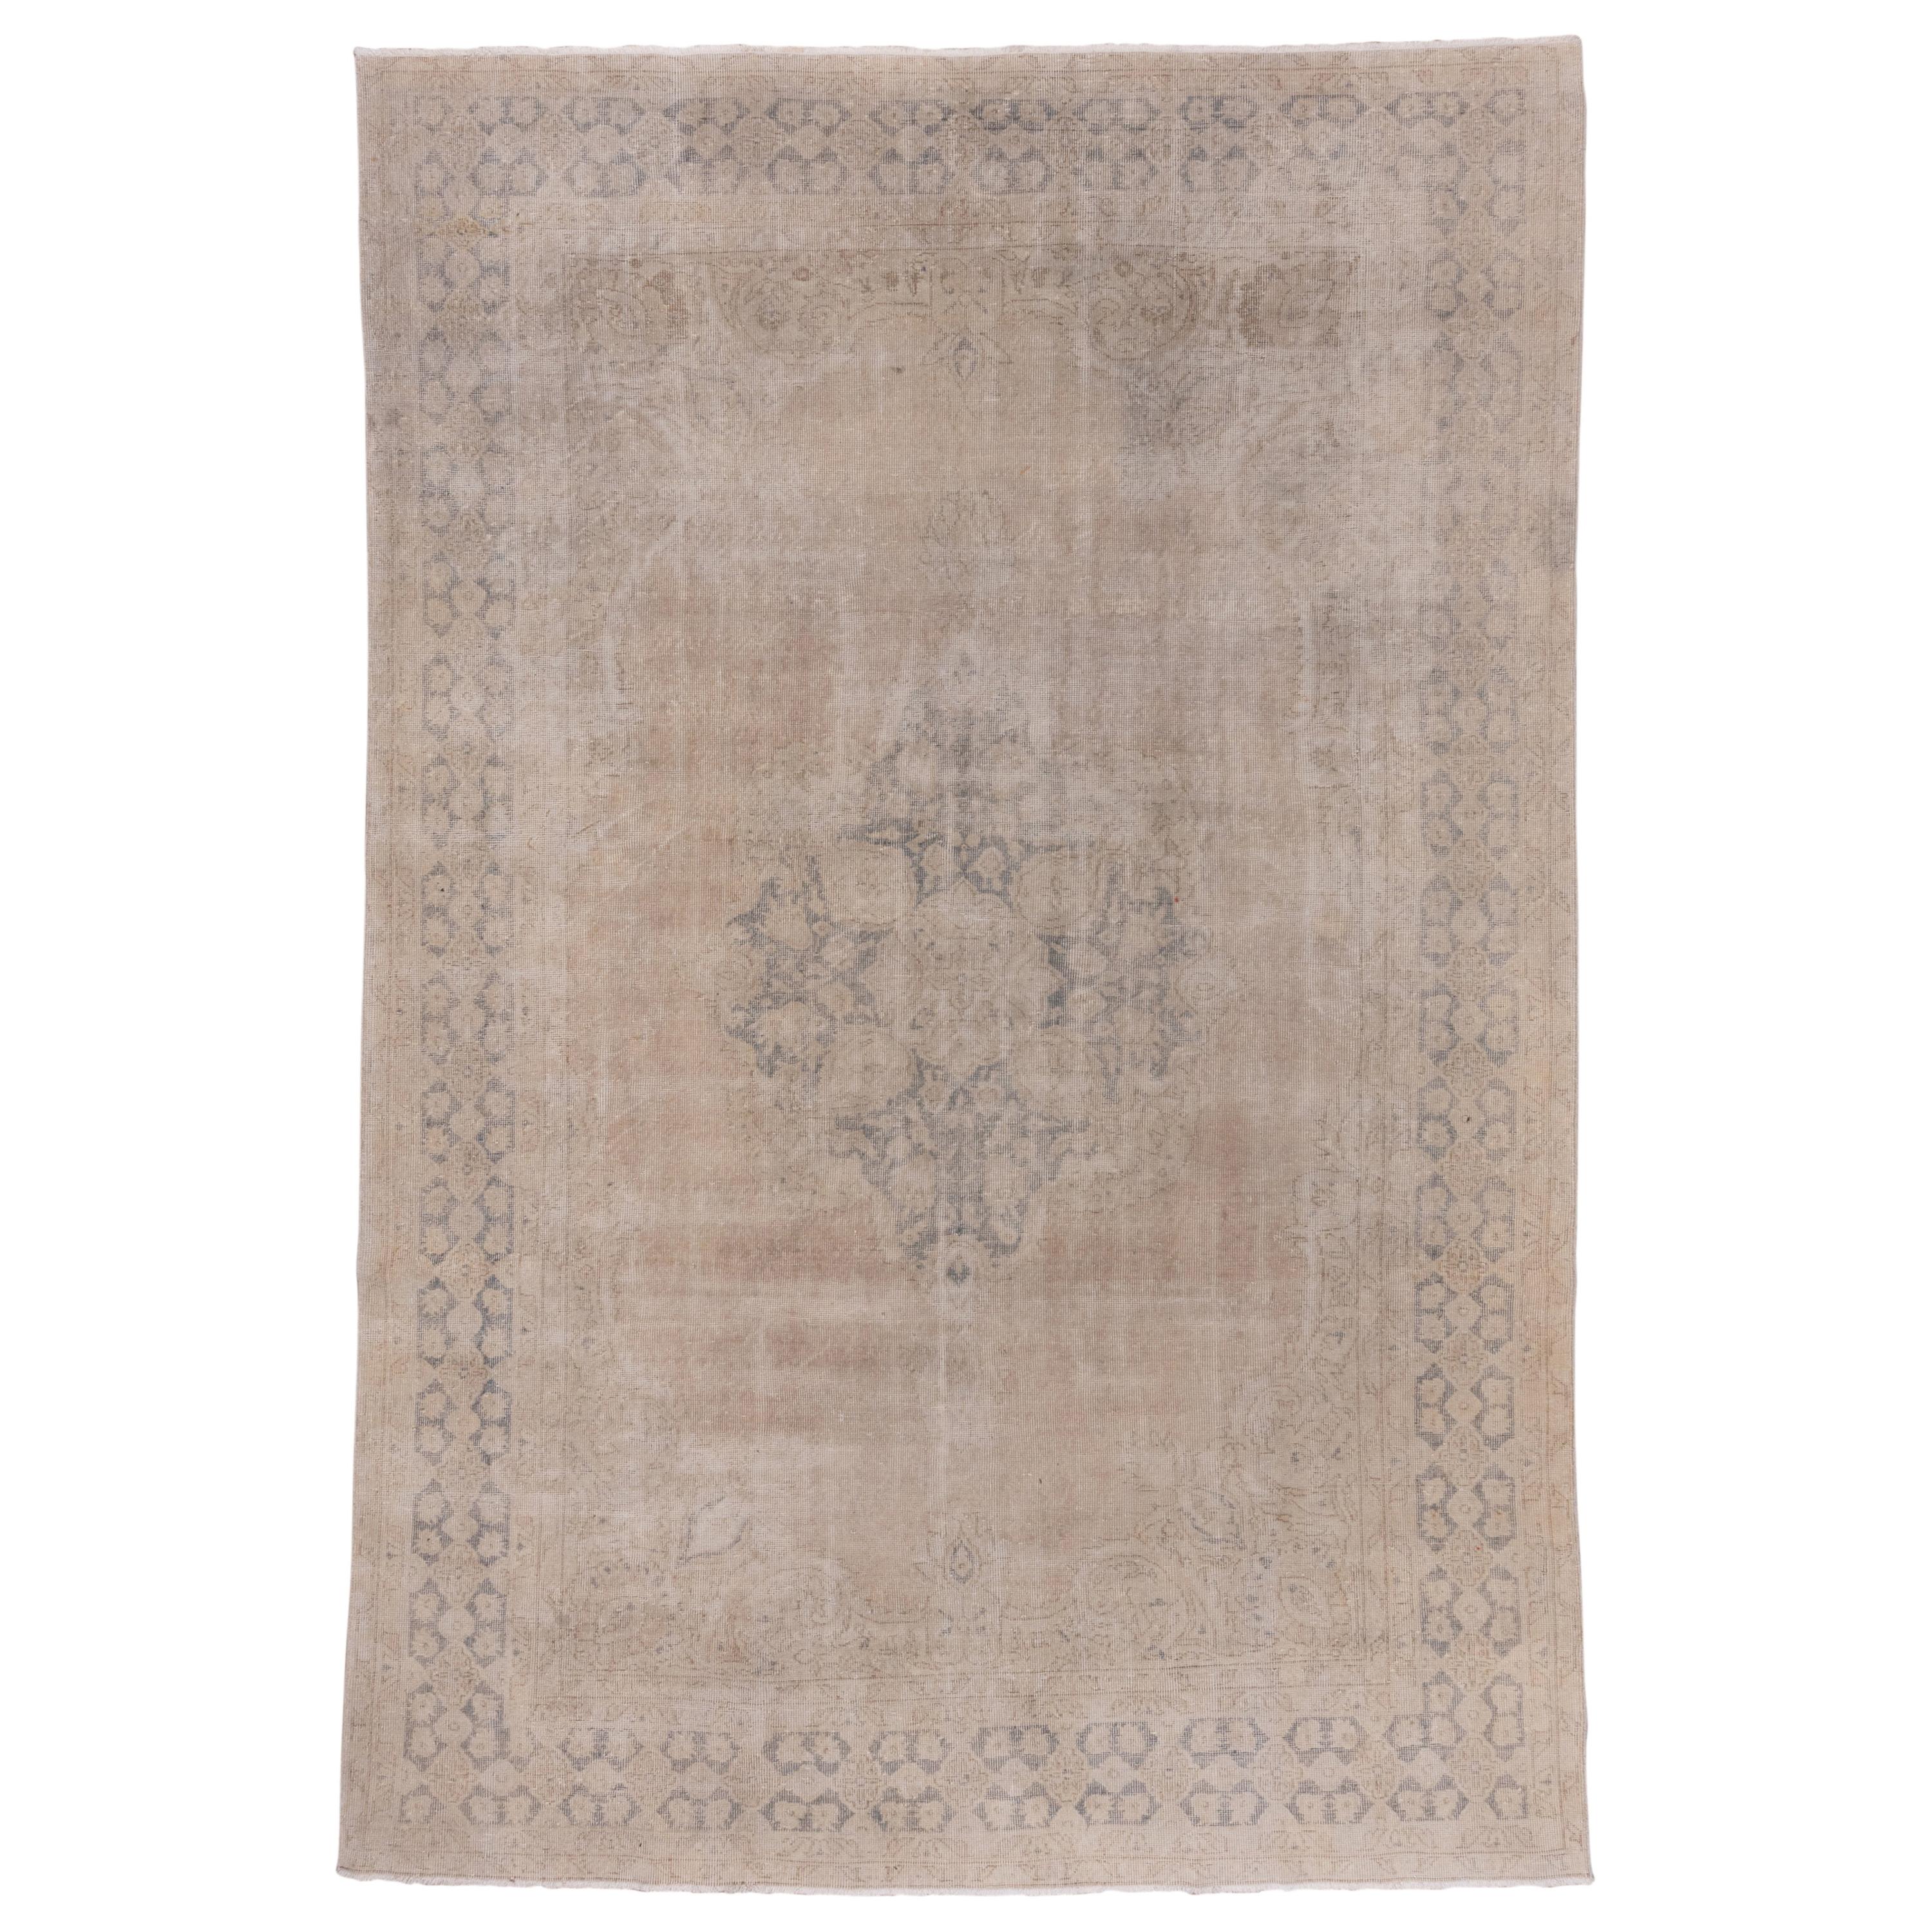 Oushak Carpet, Soft Palette, circa 1930s